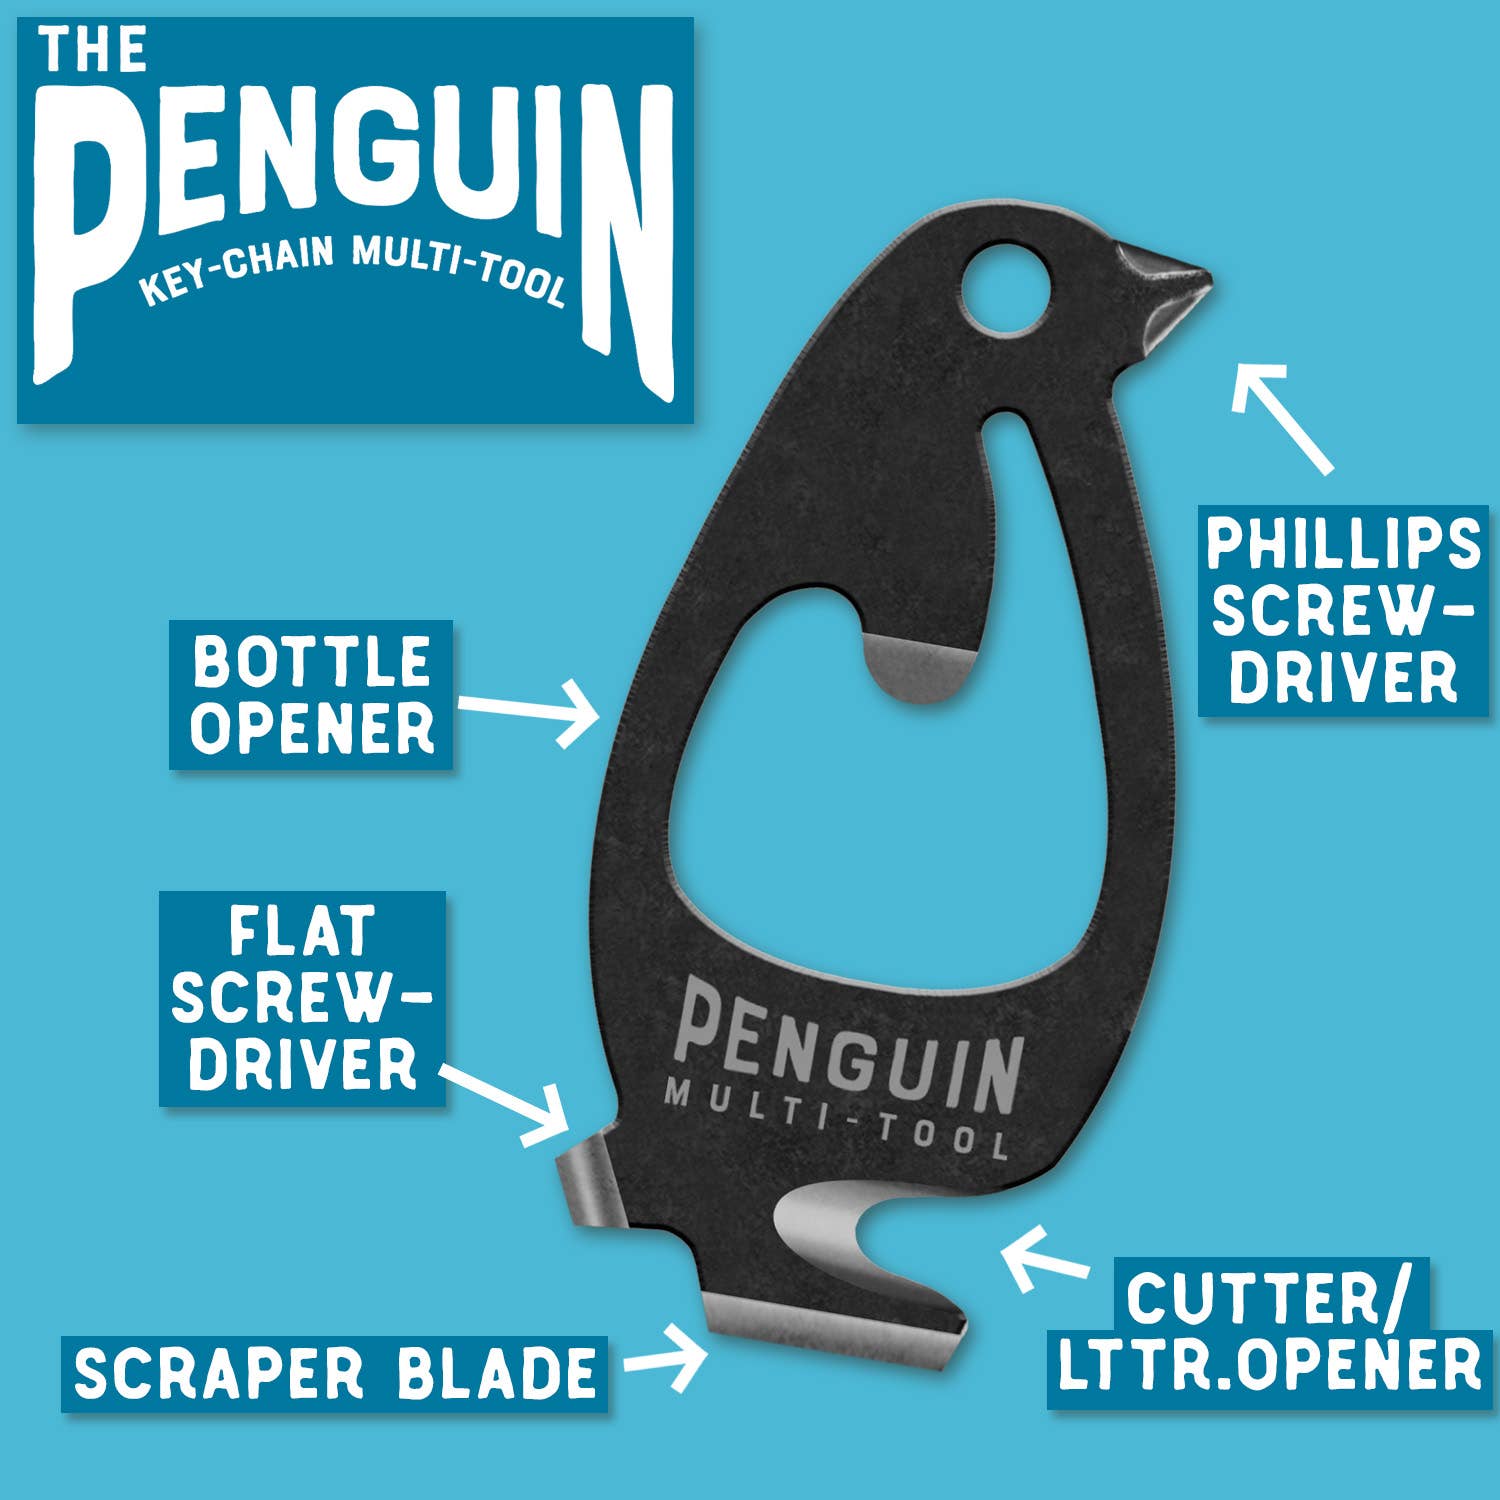 The Penguin: Pocket Multi-tool